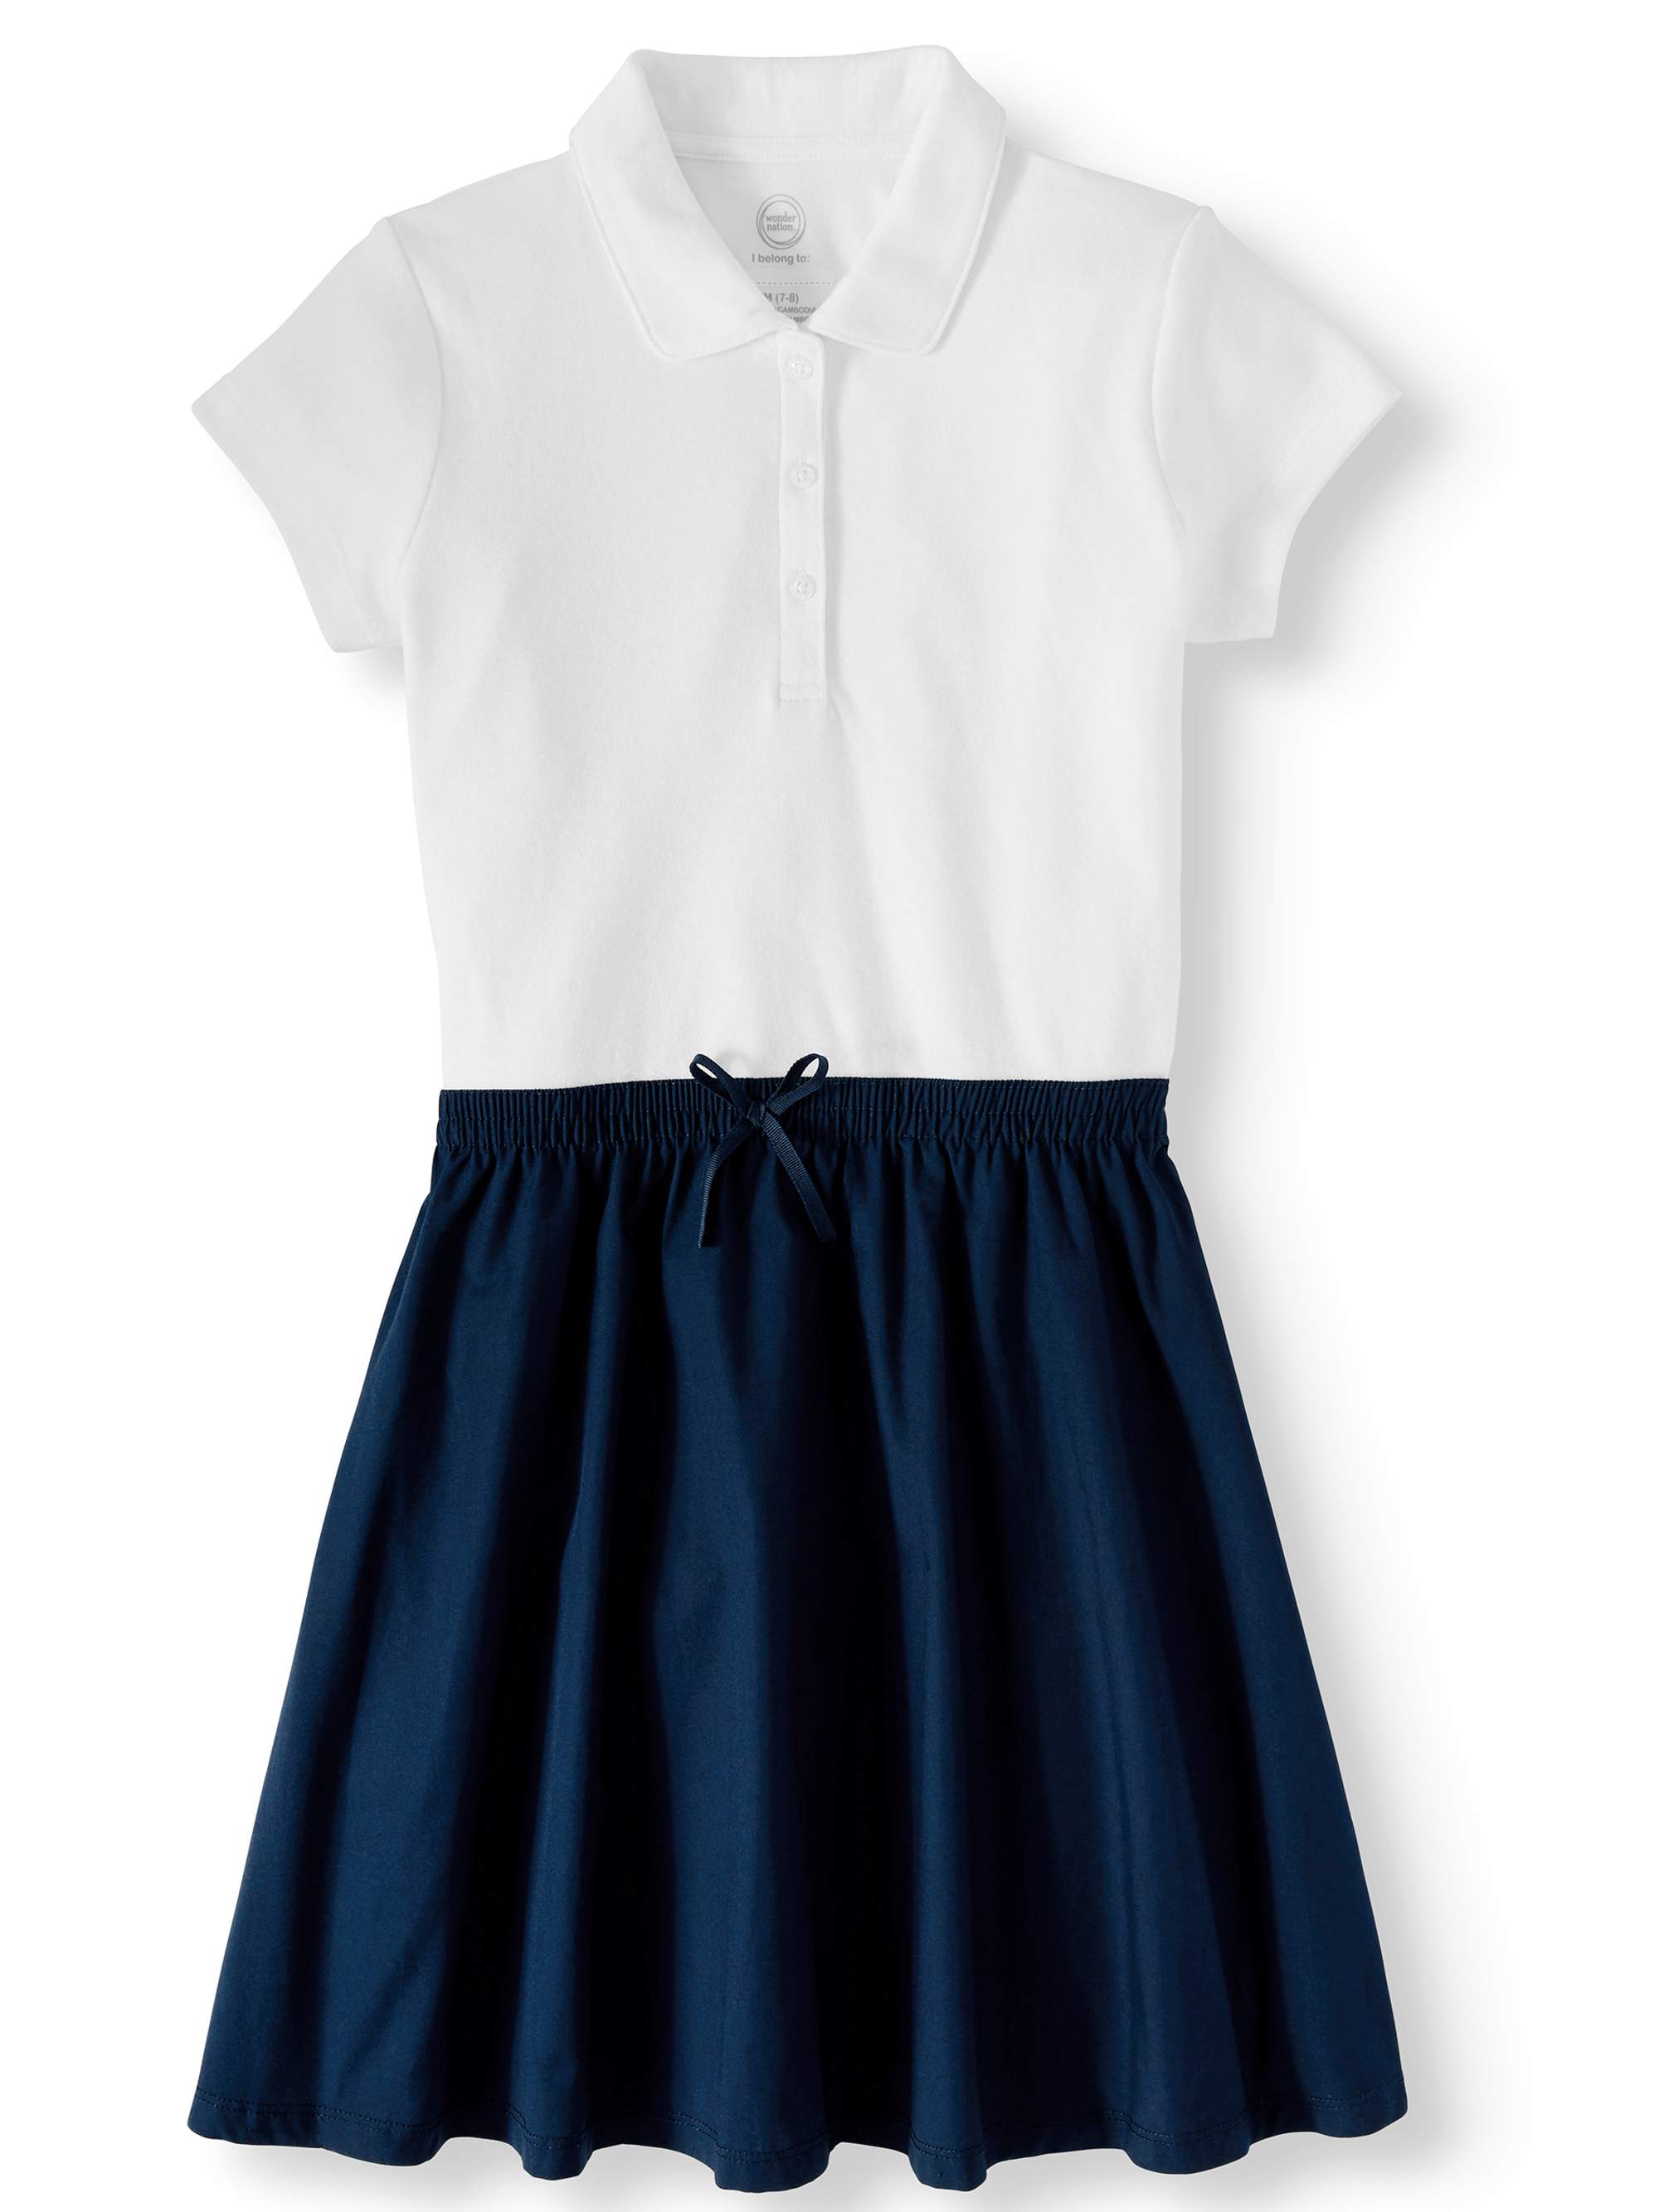 Wonder Nation Girls School Uniform Layered Look Dress, Sizes 4-16 - image 1 of 3